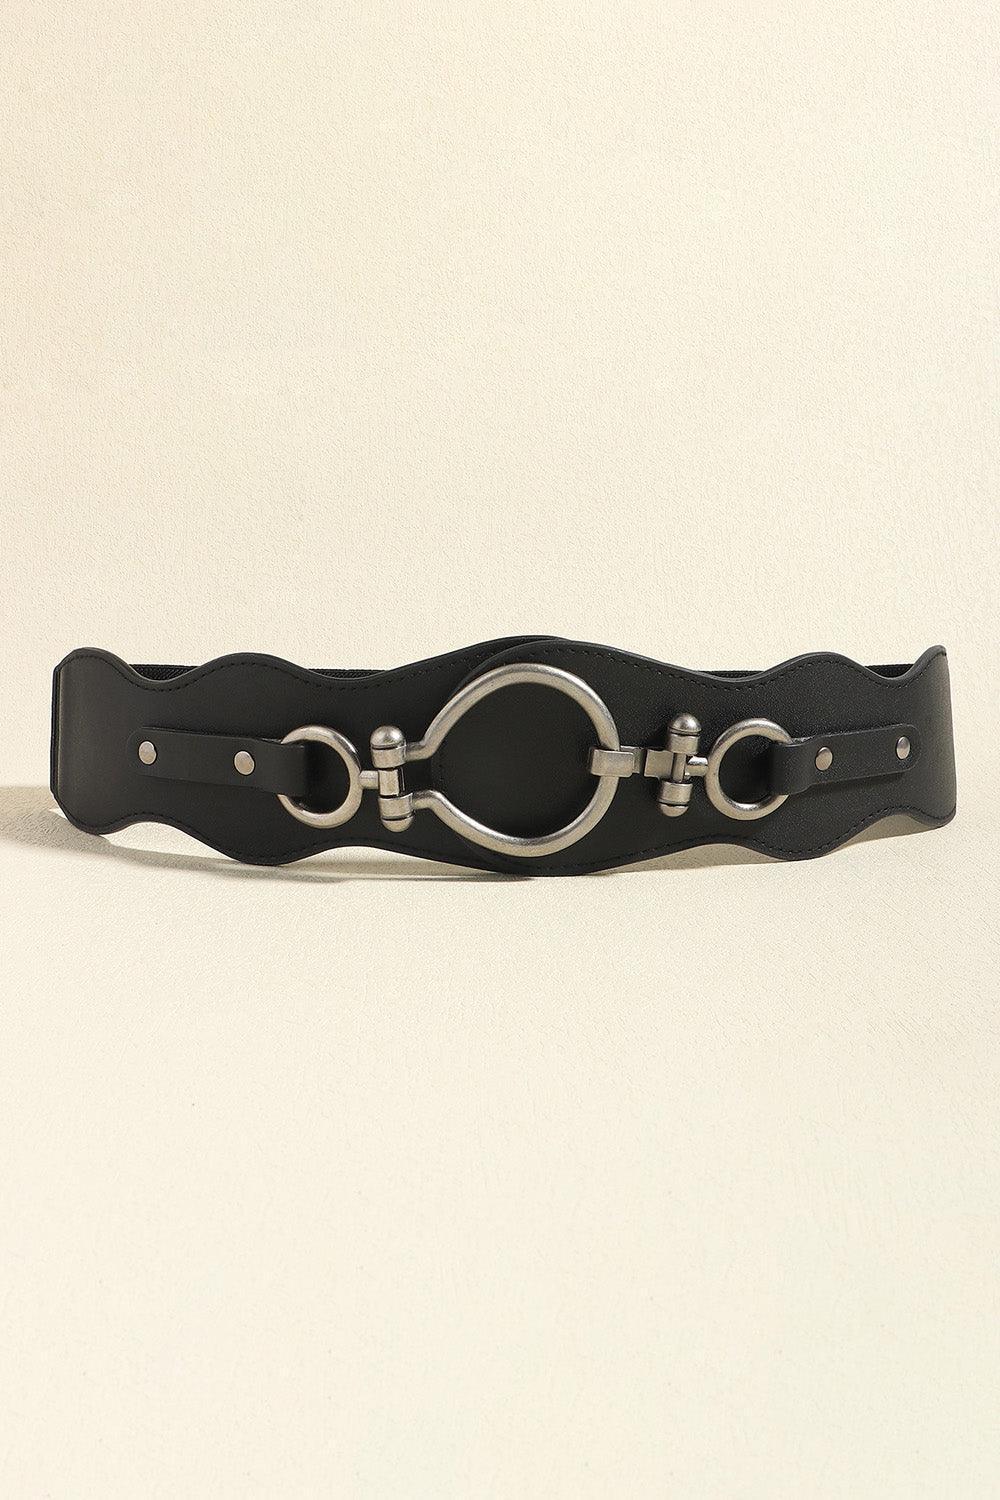 Zinc Alloy Buckle Black Leather Belt - MXSTUDIO.COM